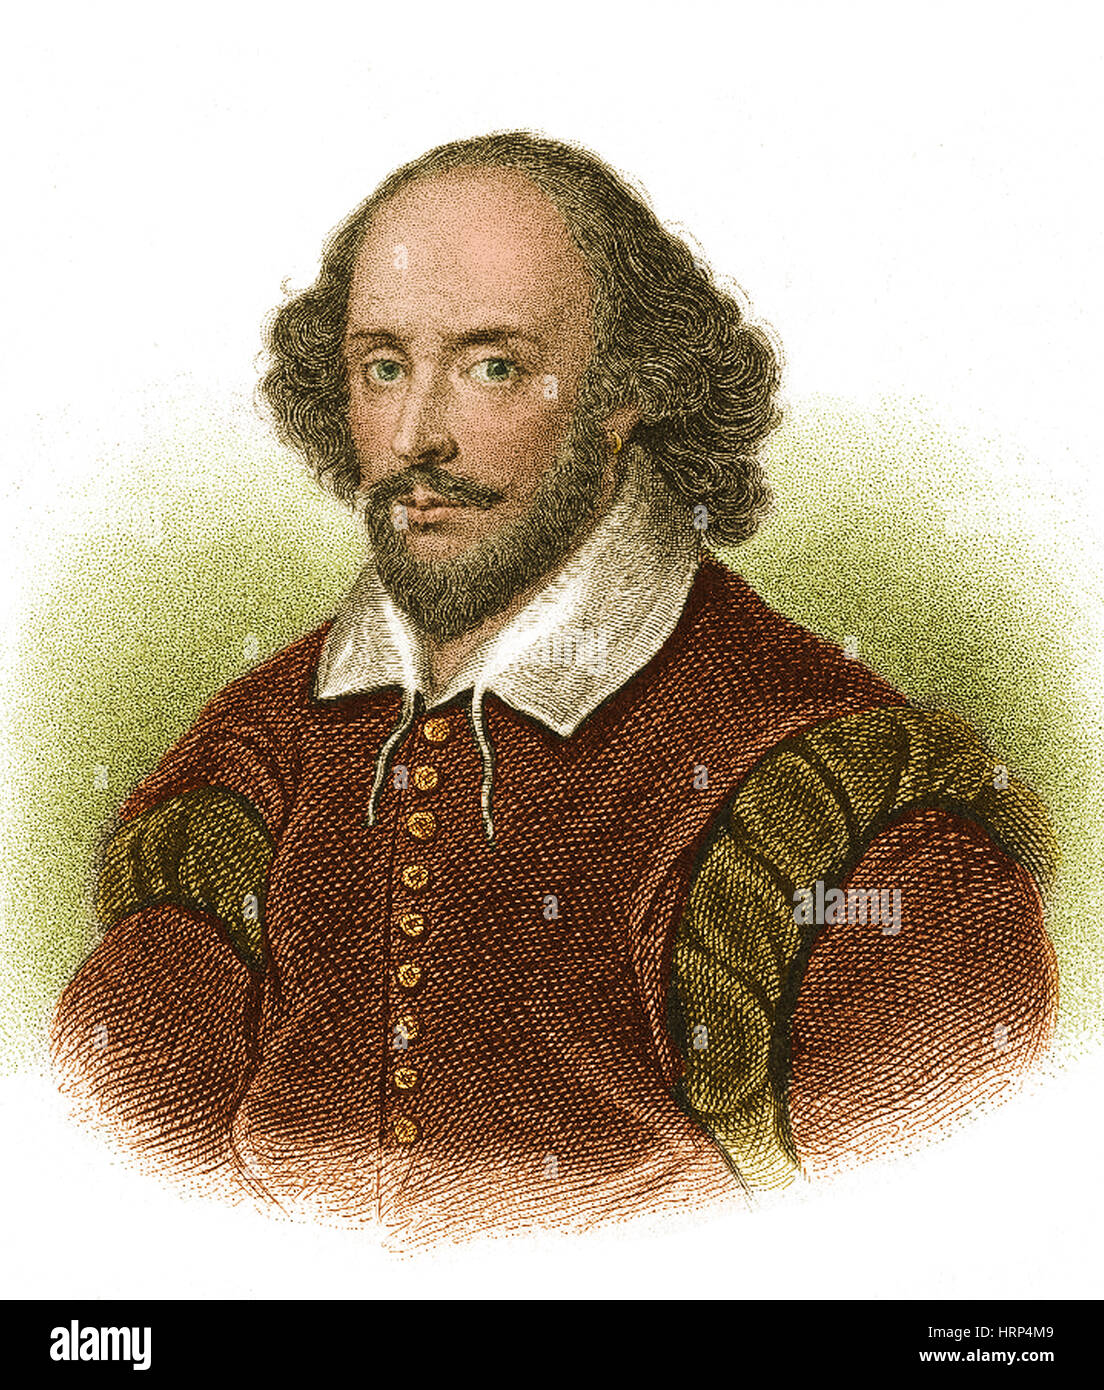 William Shakespeare, dramaturge anglais Banque D'Images